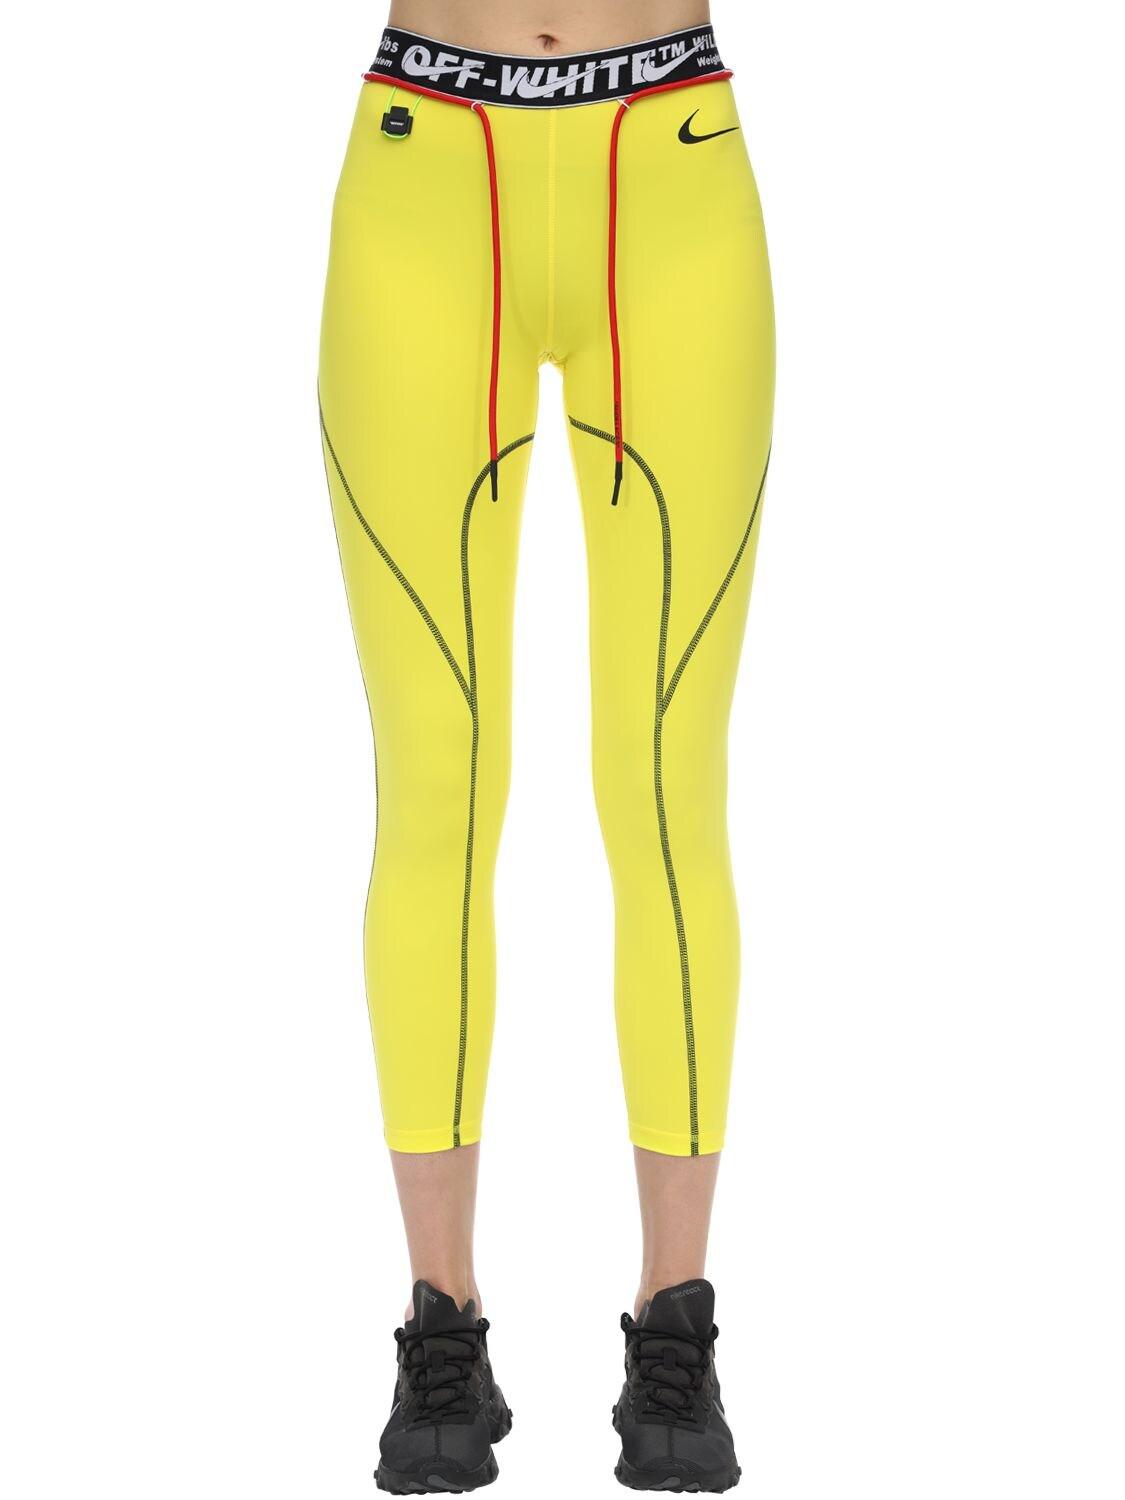 Nike Off-white W Nrg Ru Pro Tight Leggings in Yellow | Lyst Australia